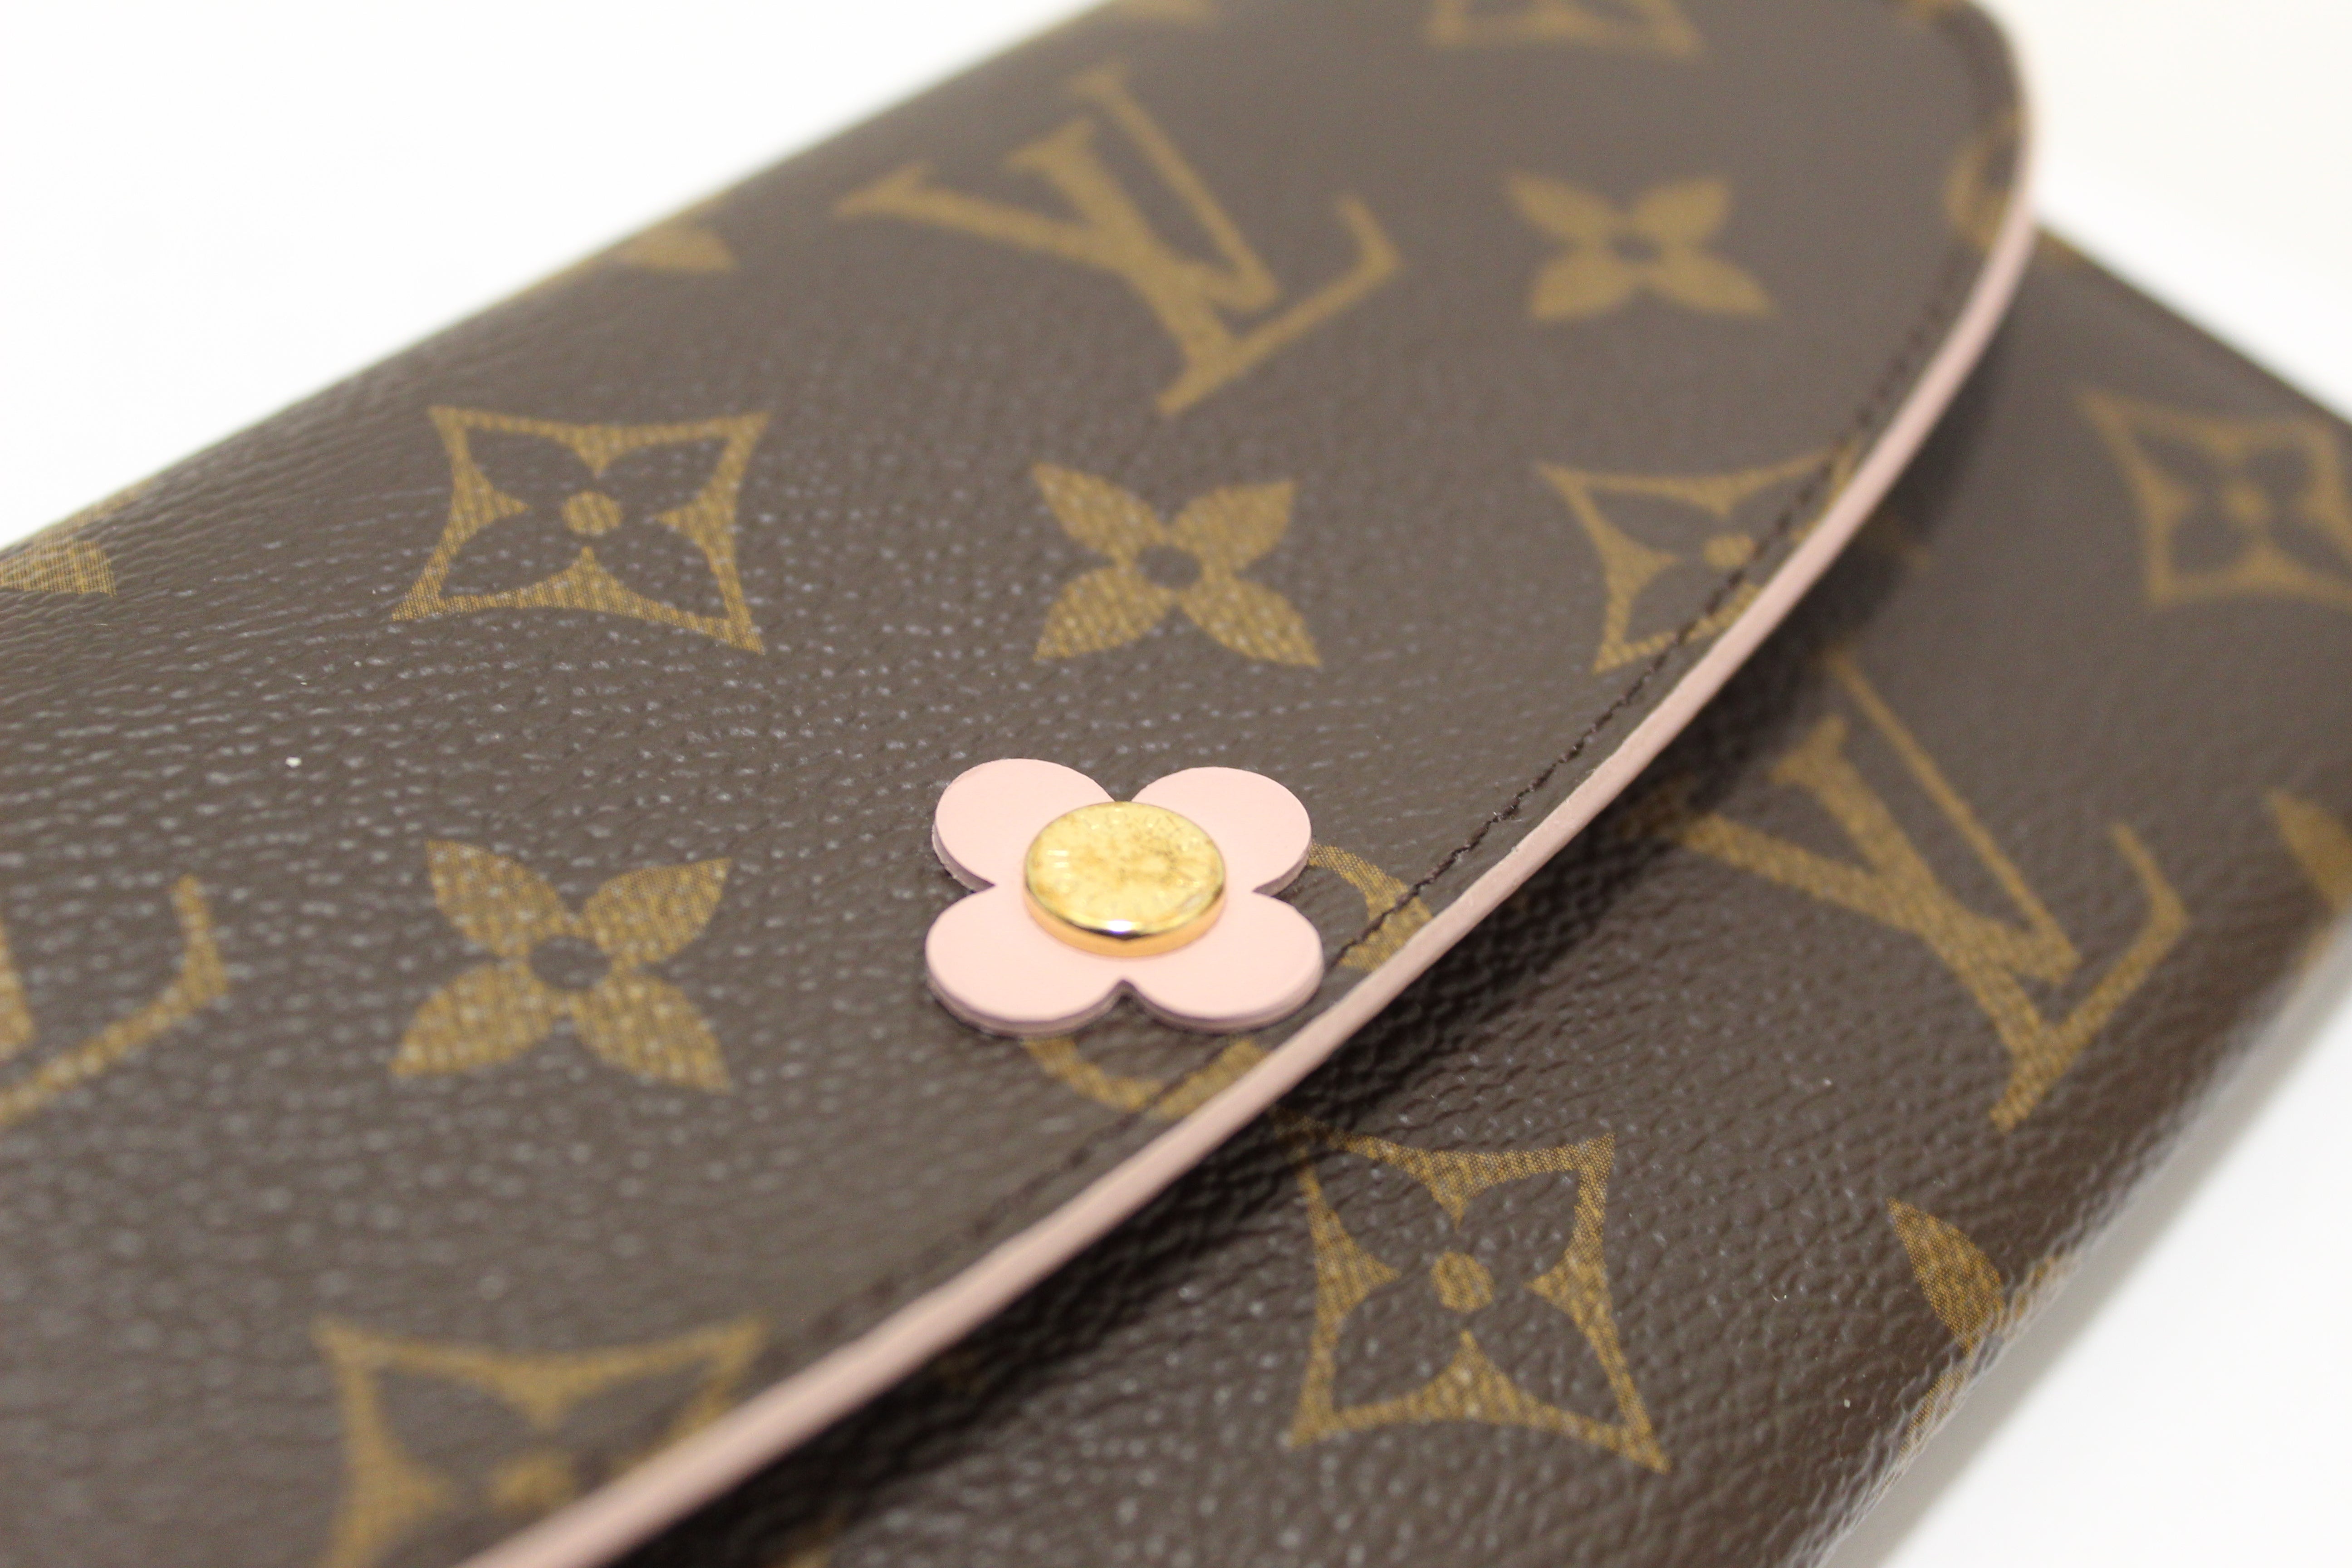 New Release! Louis Vuitton Emilie Bloom Flower Wallet! 